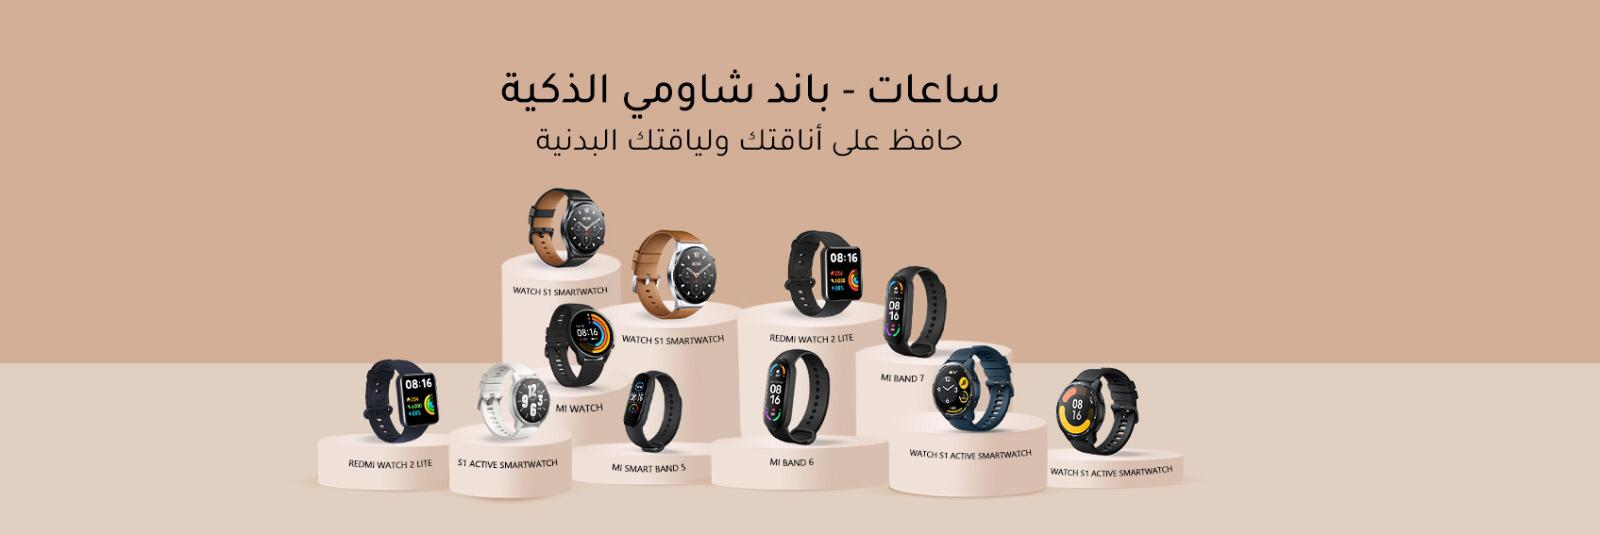 Xiaomi-Smart-watches-bands